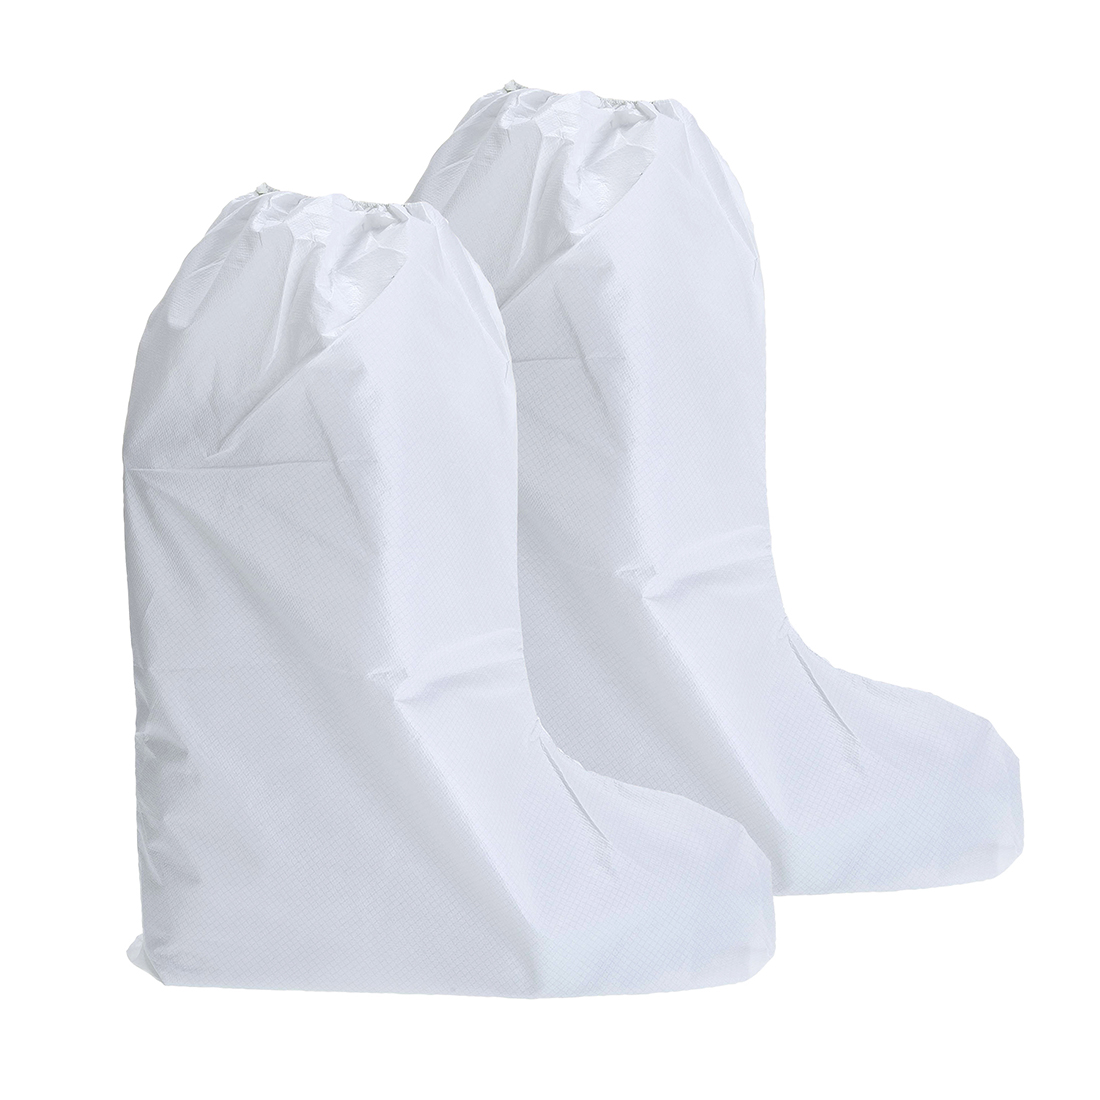 BizTex Microporous Boot Cover Type PB[6] Size  White